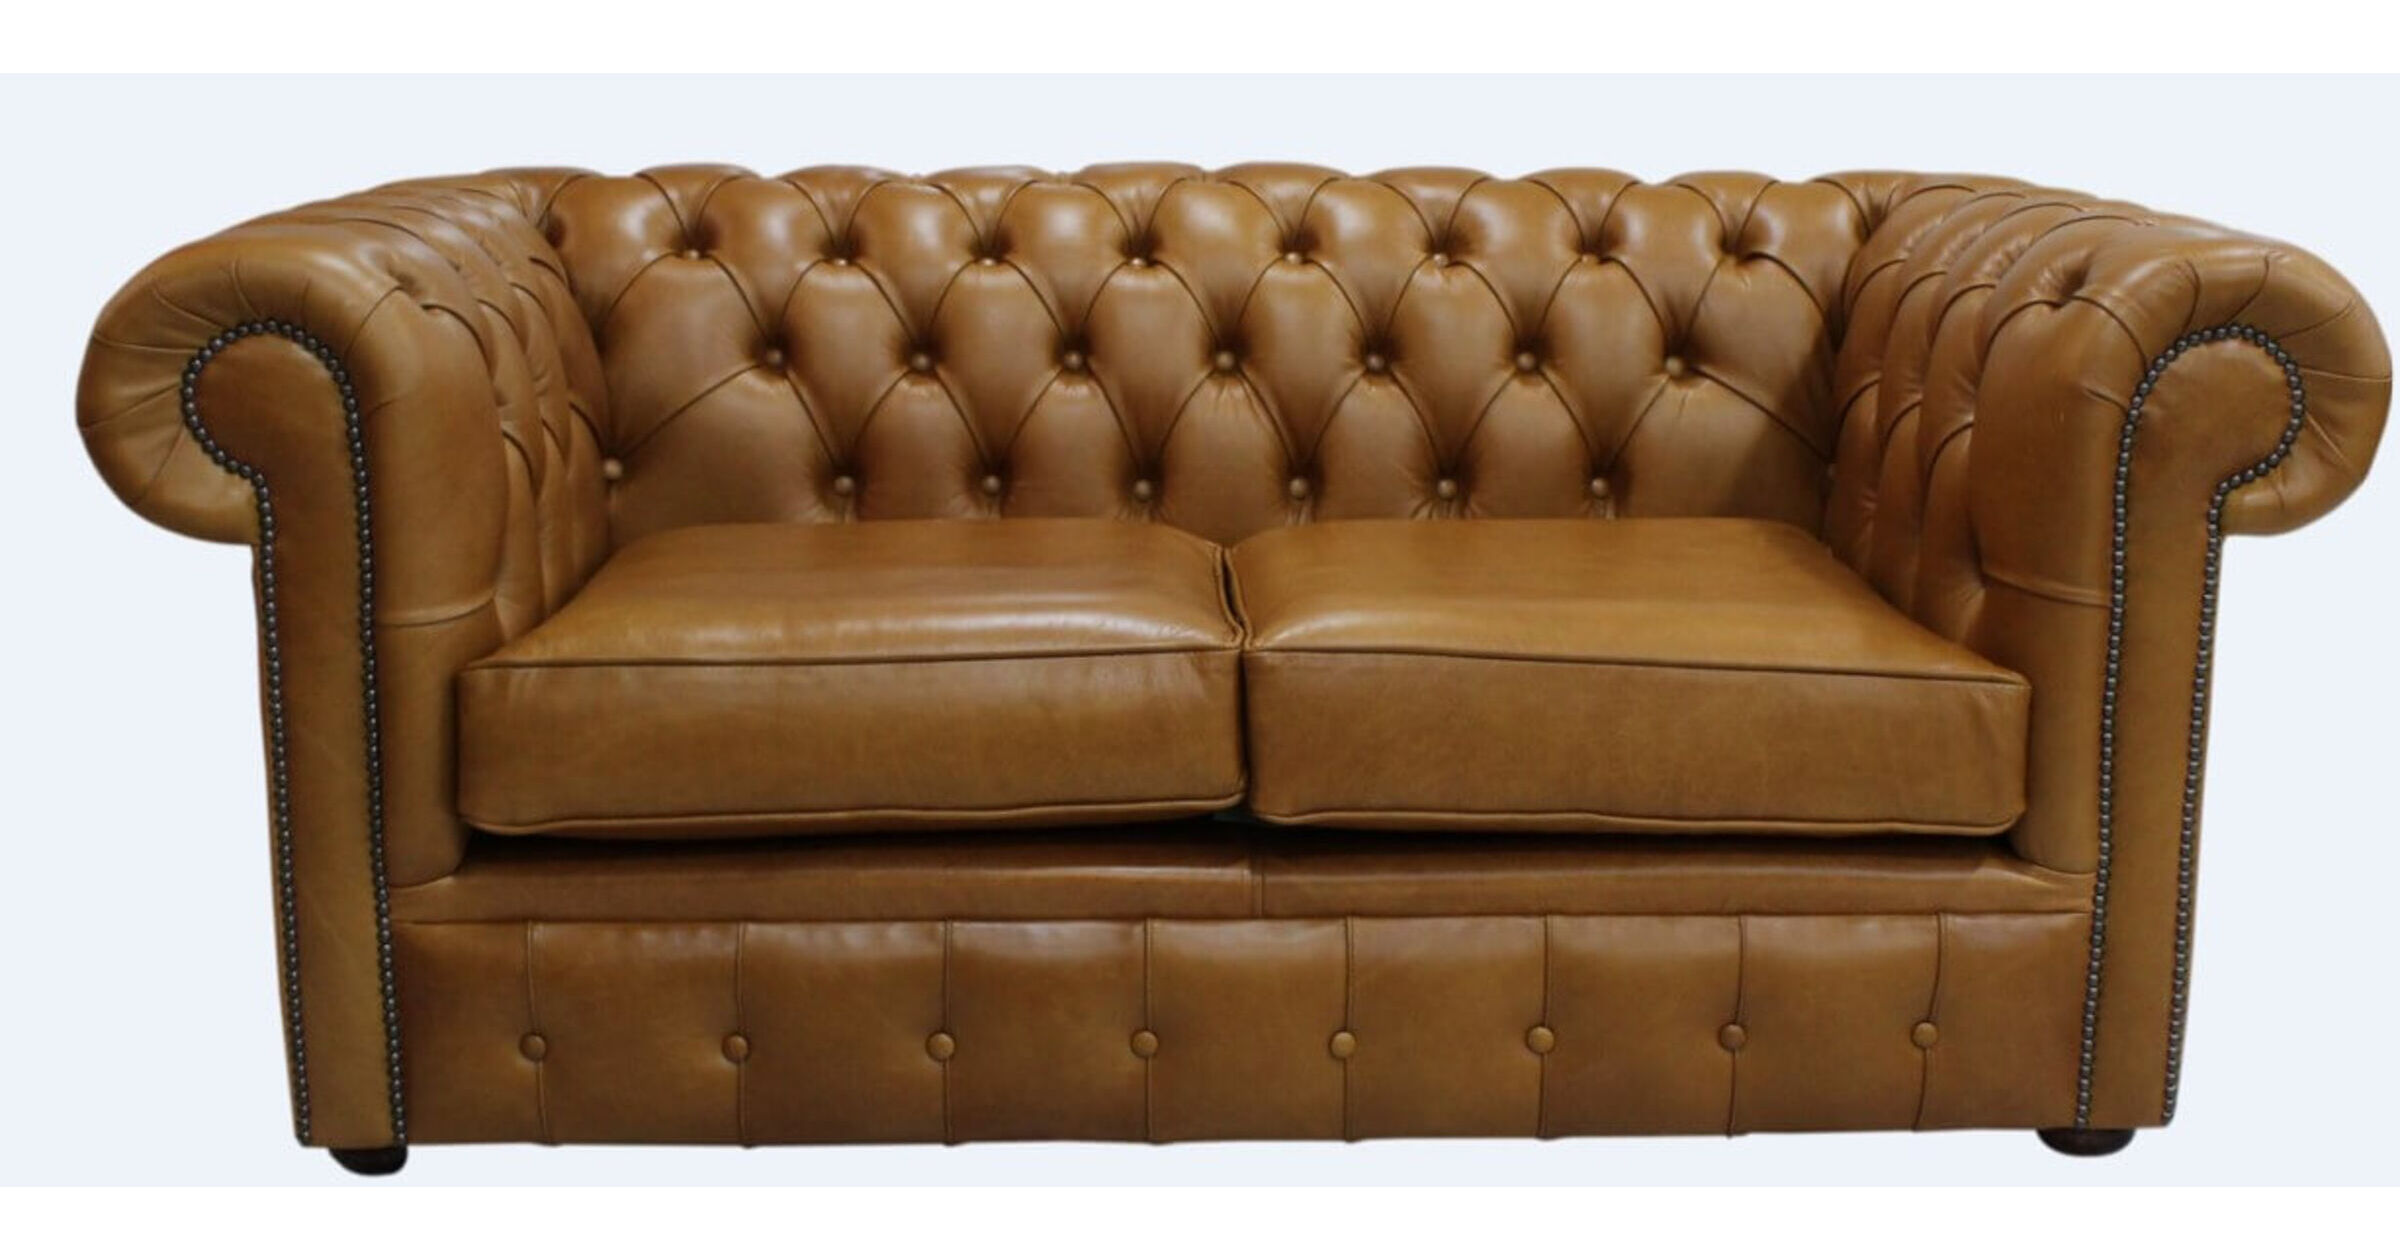 caramel leather chesterfield sofa